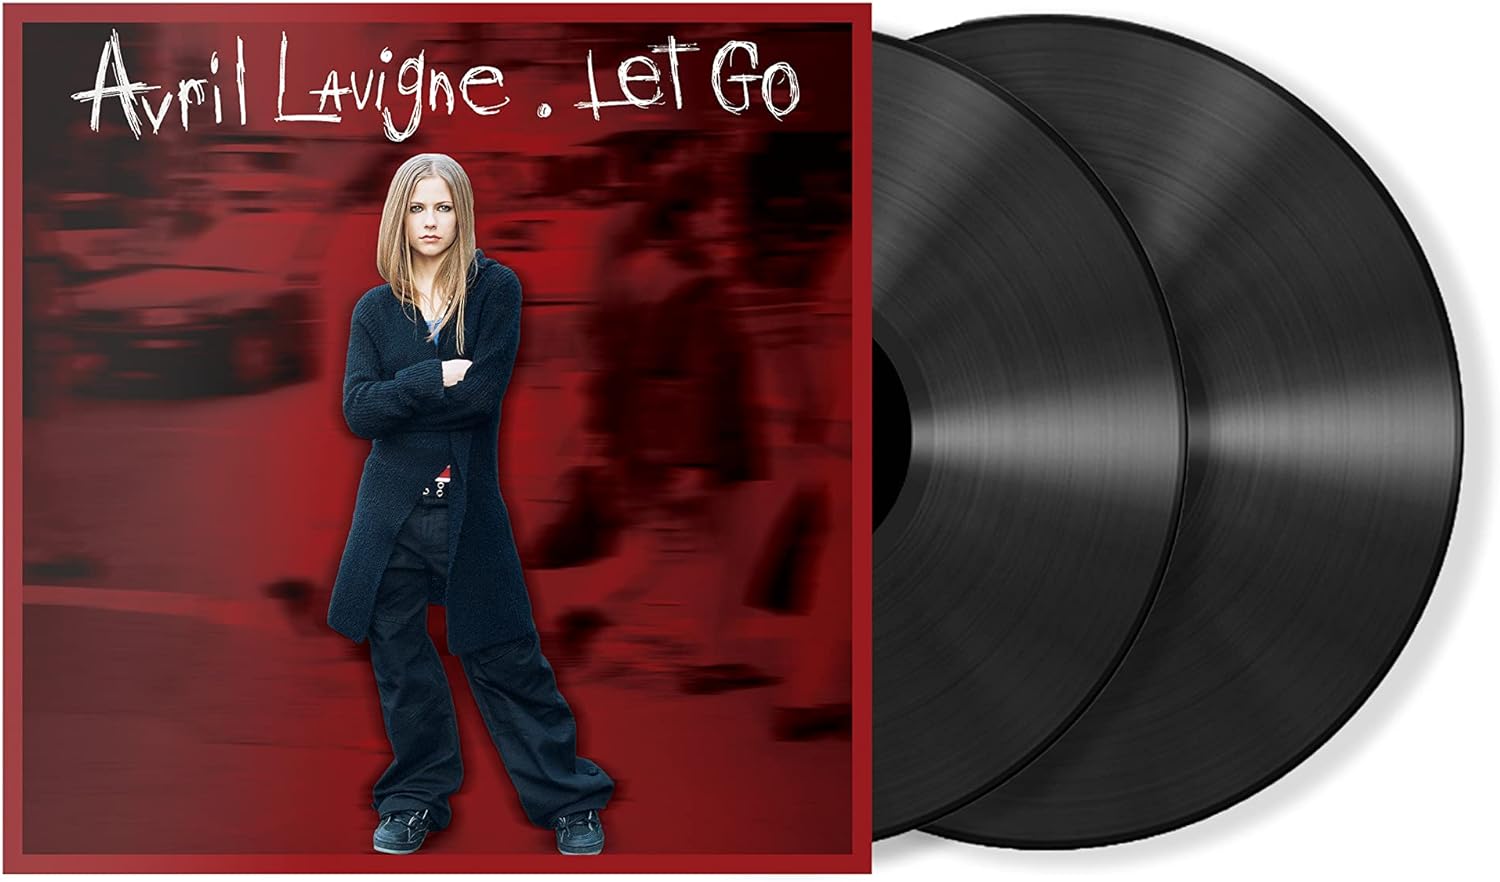 Avril Lavigne "Let Go" 20th Anniversary 2x12" Vinyl